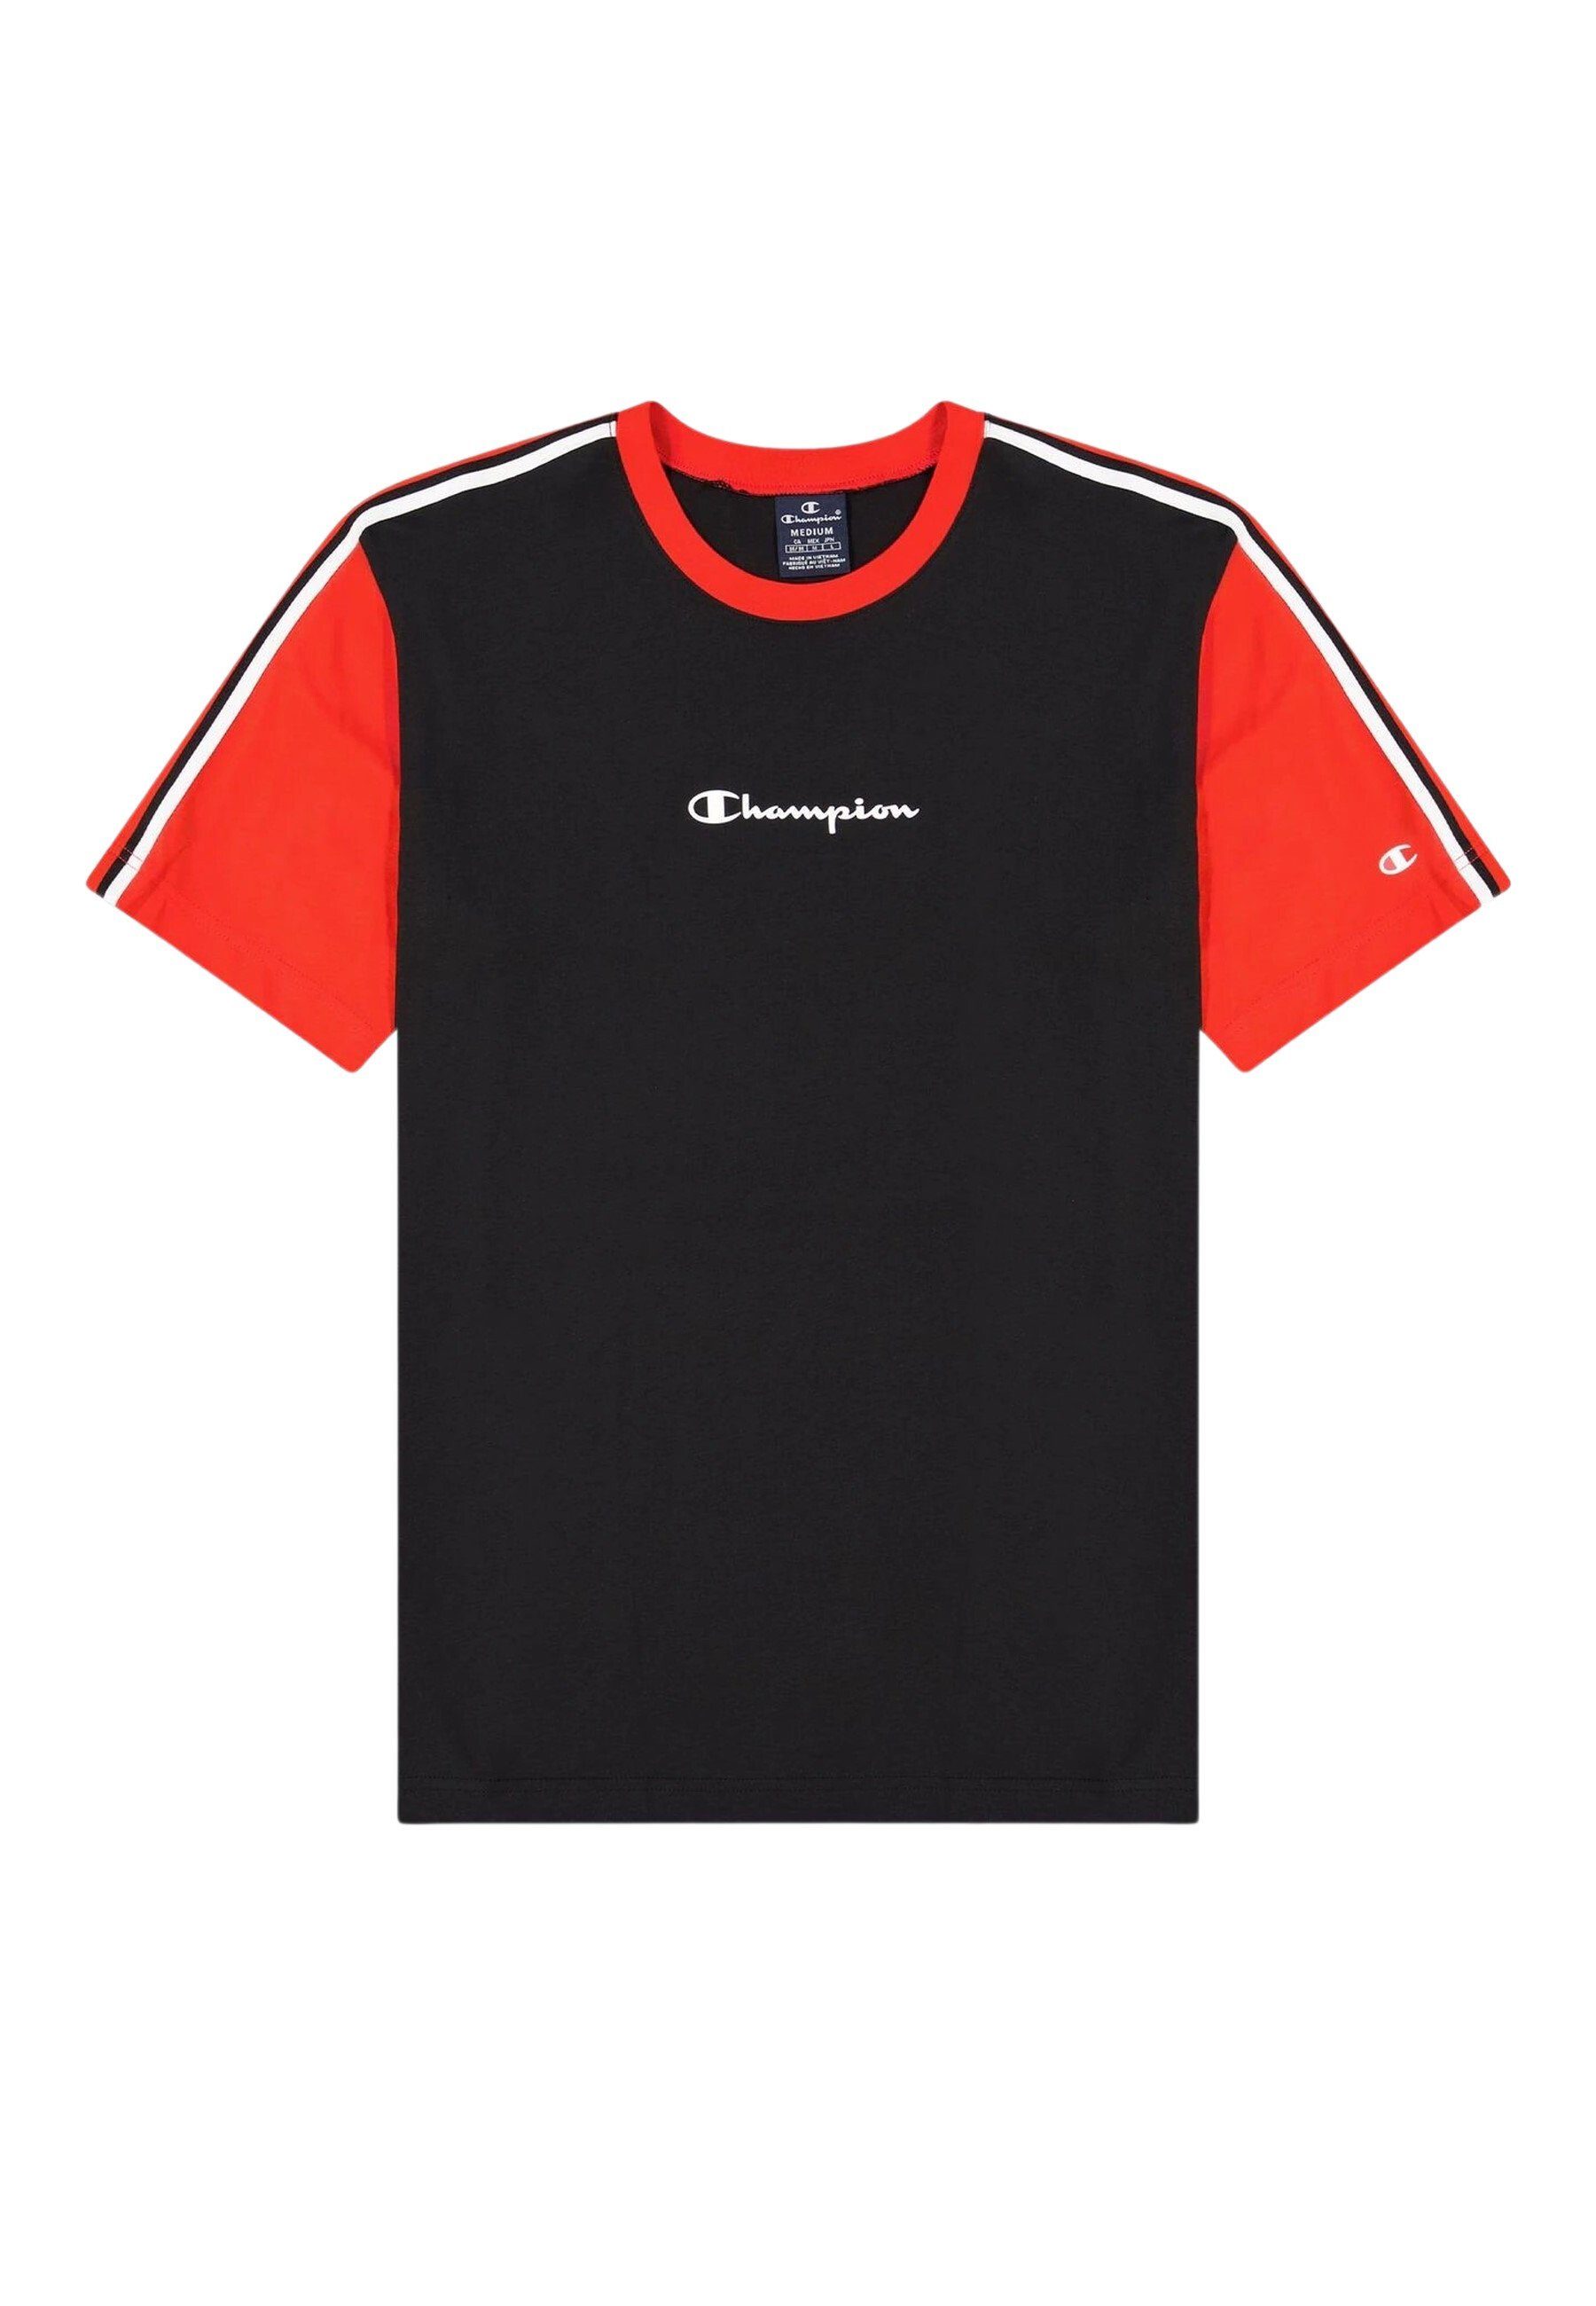 Comfort Jacquardband T-Shirt Shirt in mit schwarz Champion Rundhals-T-Shirt